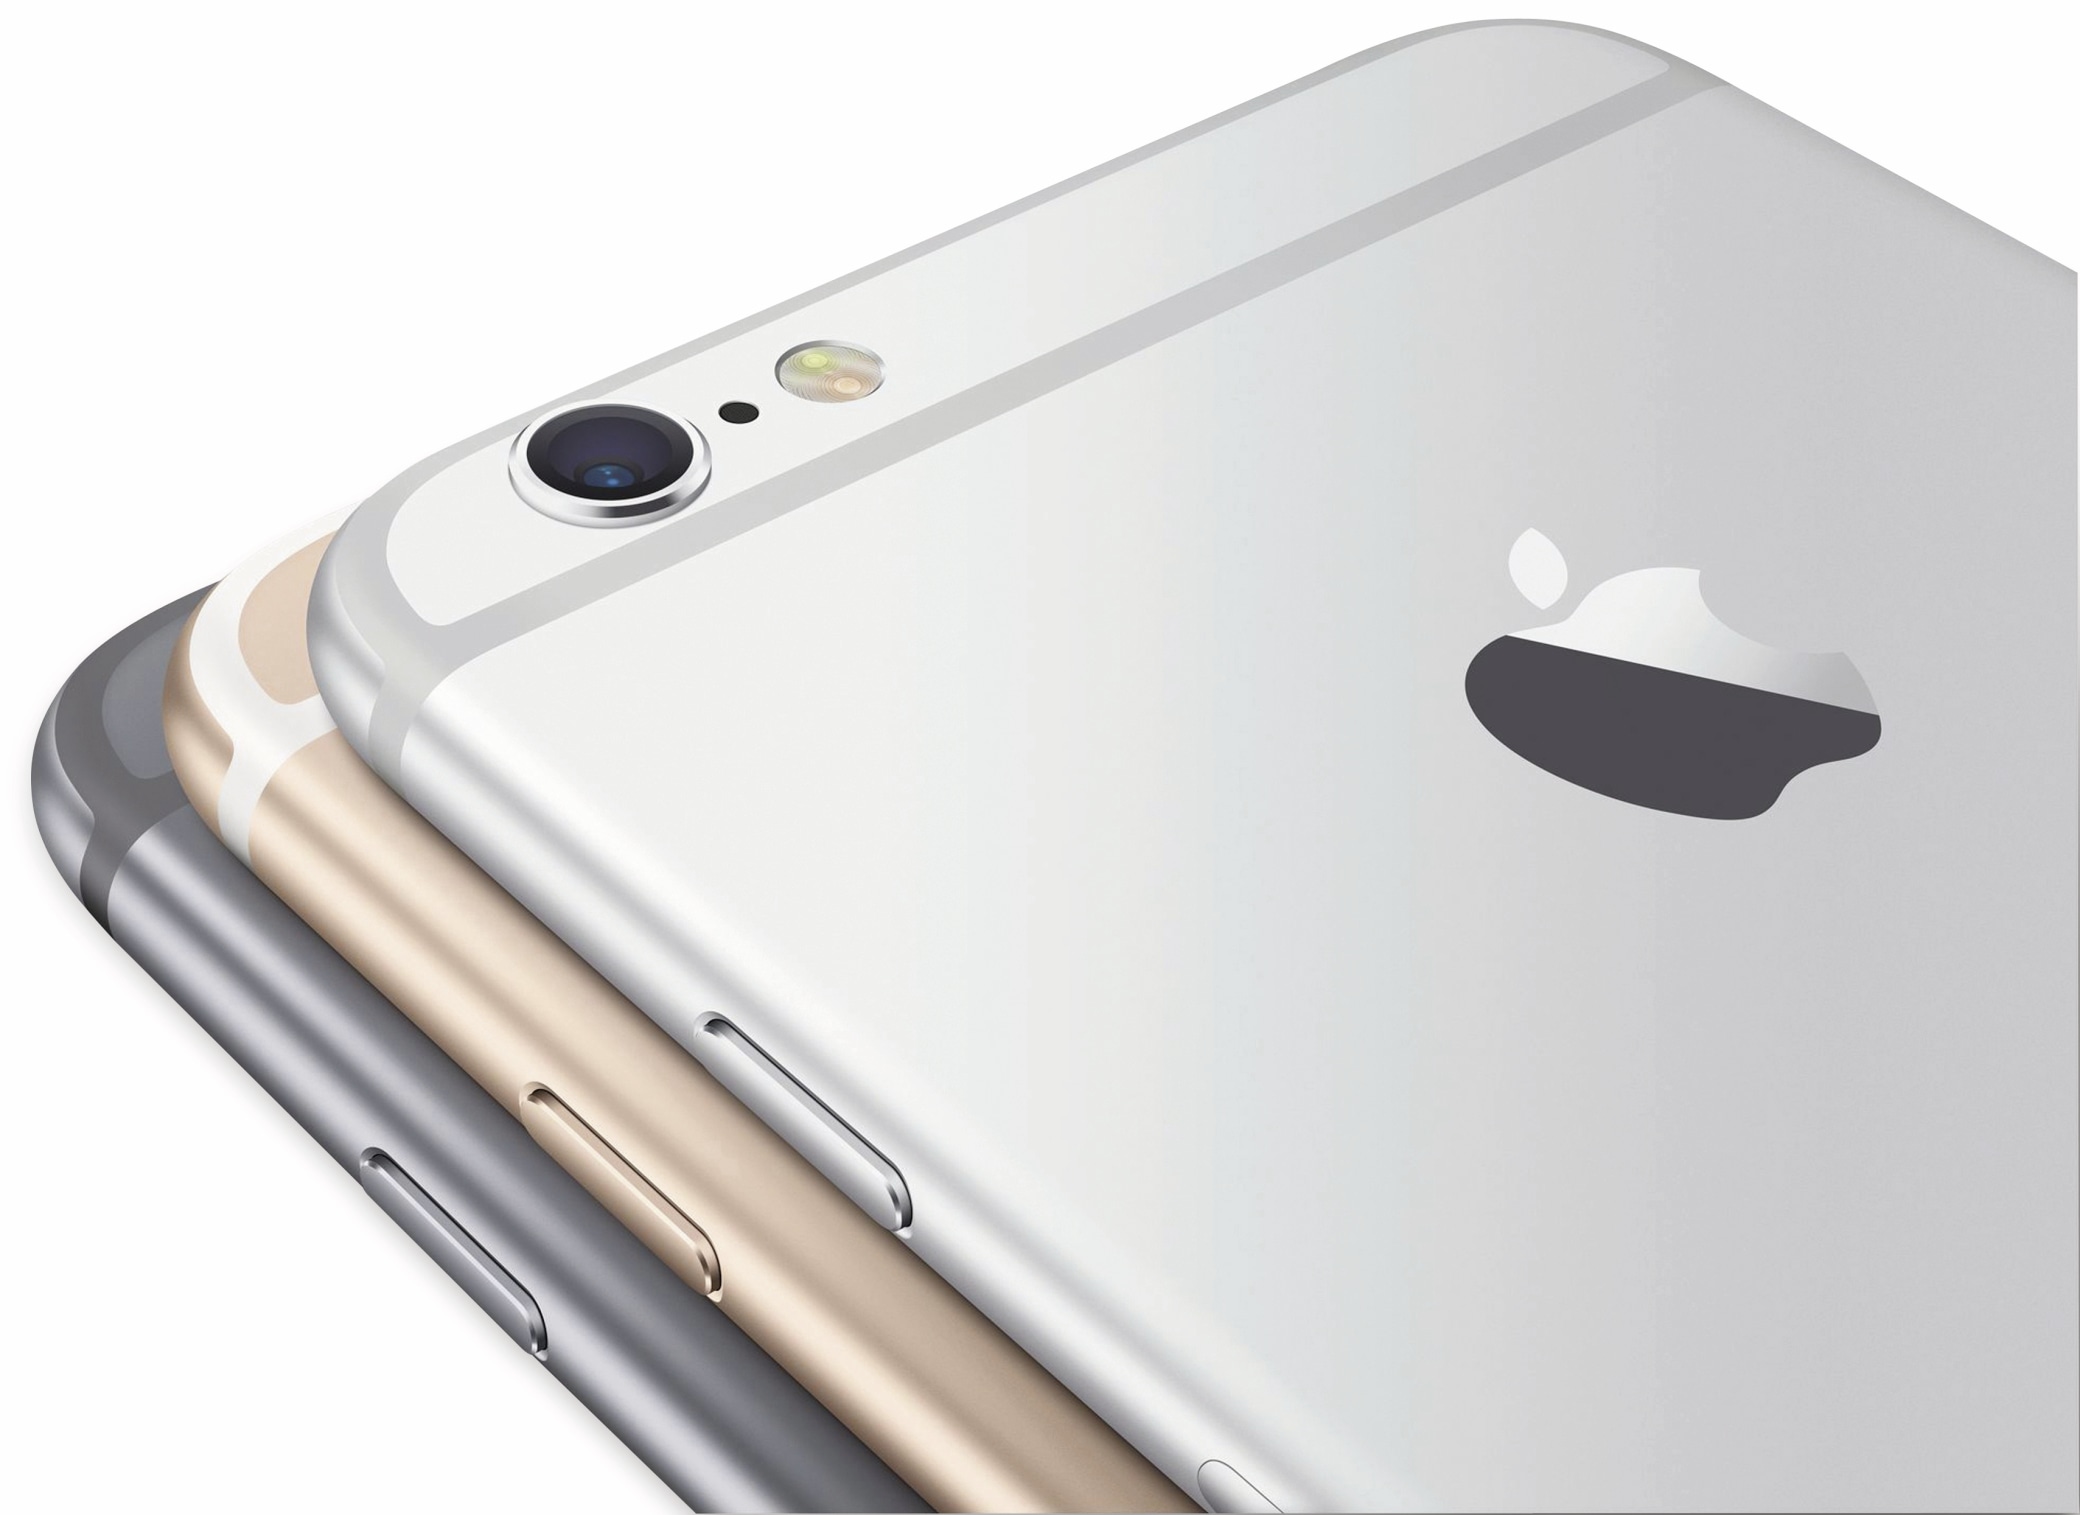 Apple Smartphone iPhone 6, 64 GB, Space Grau, Refurbished